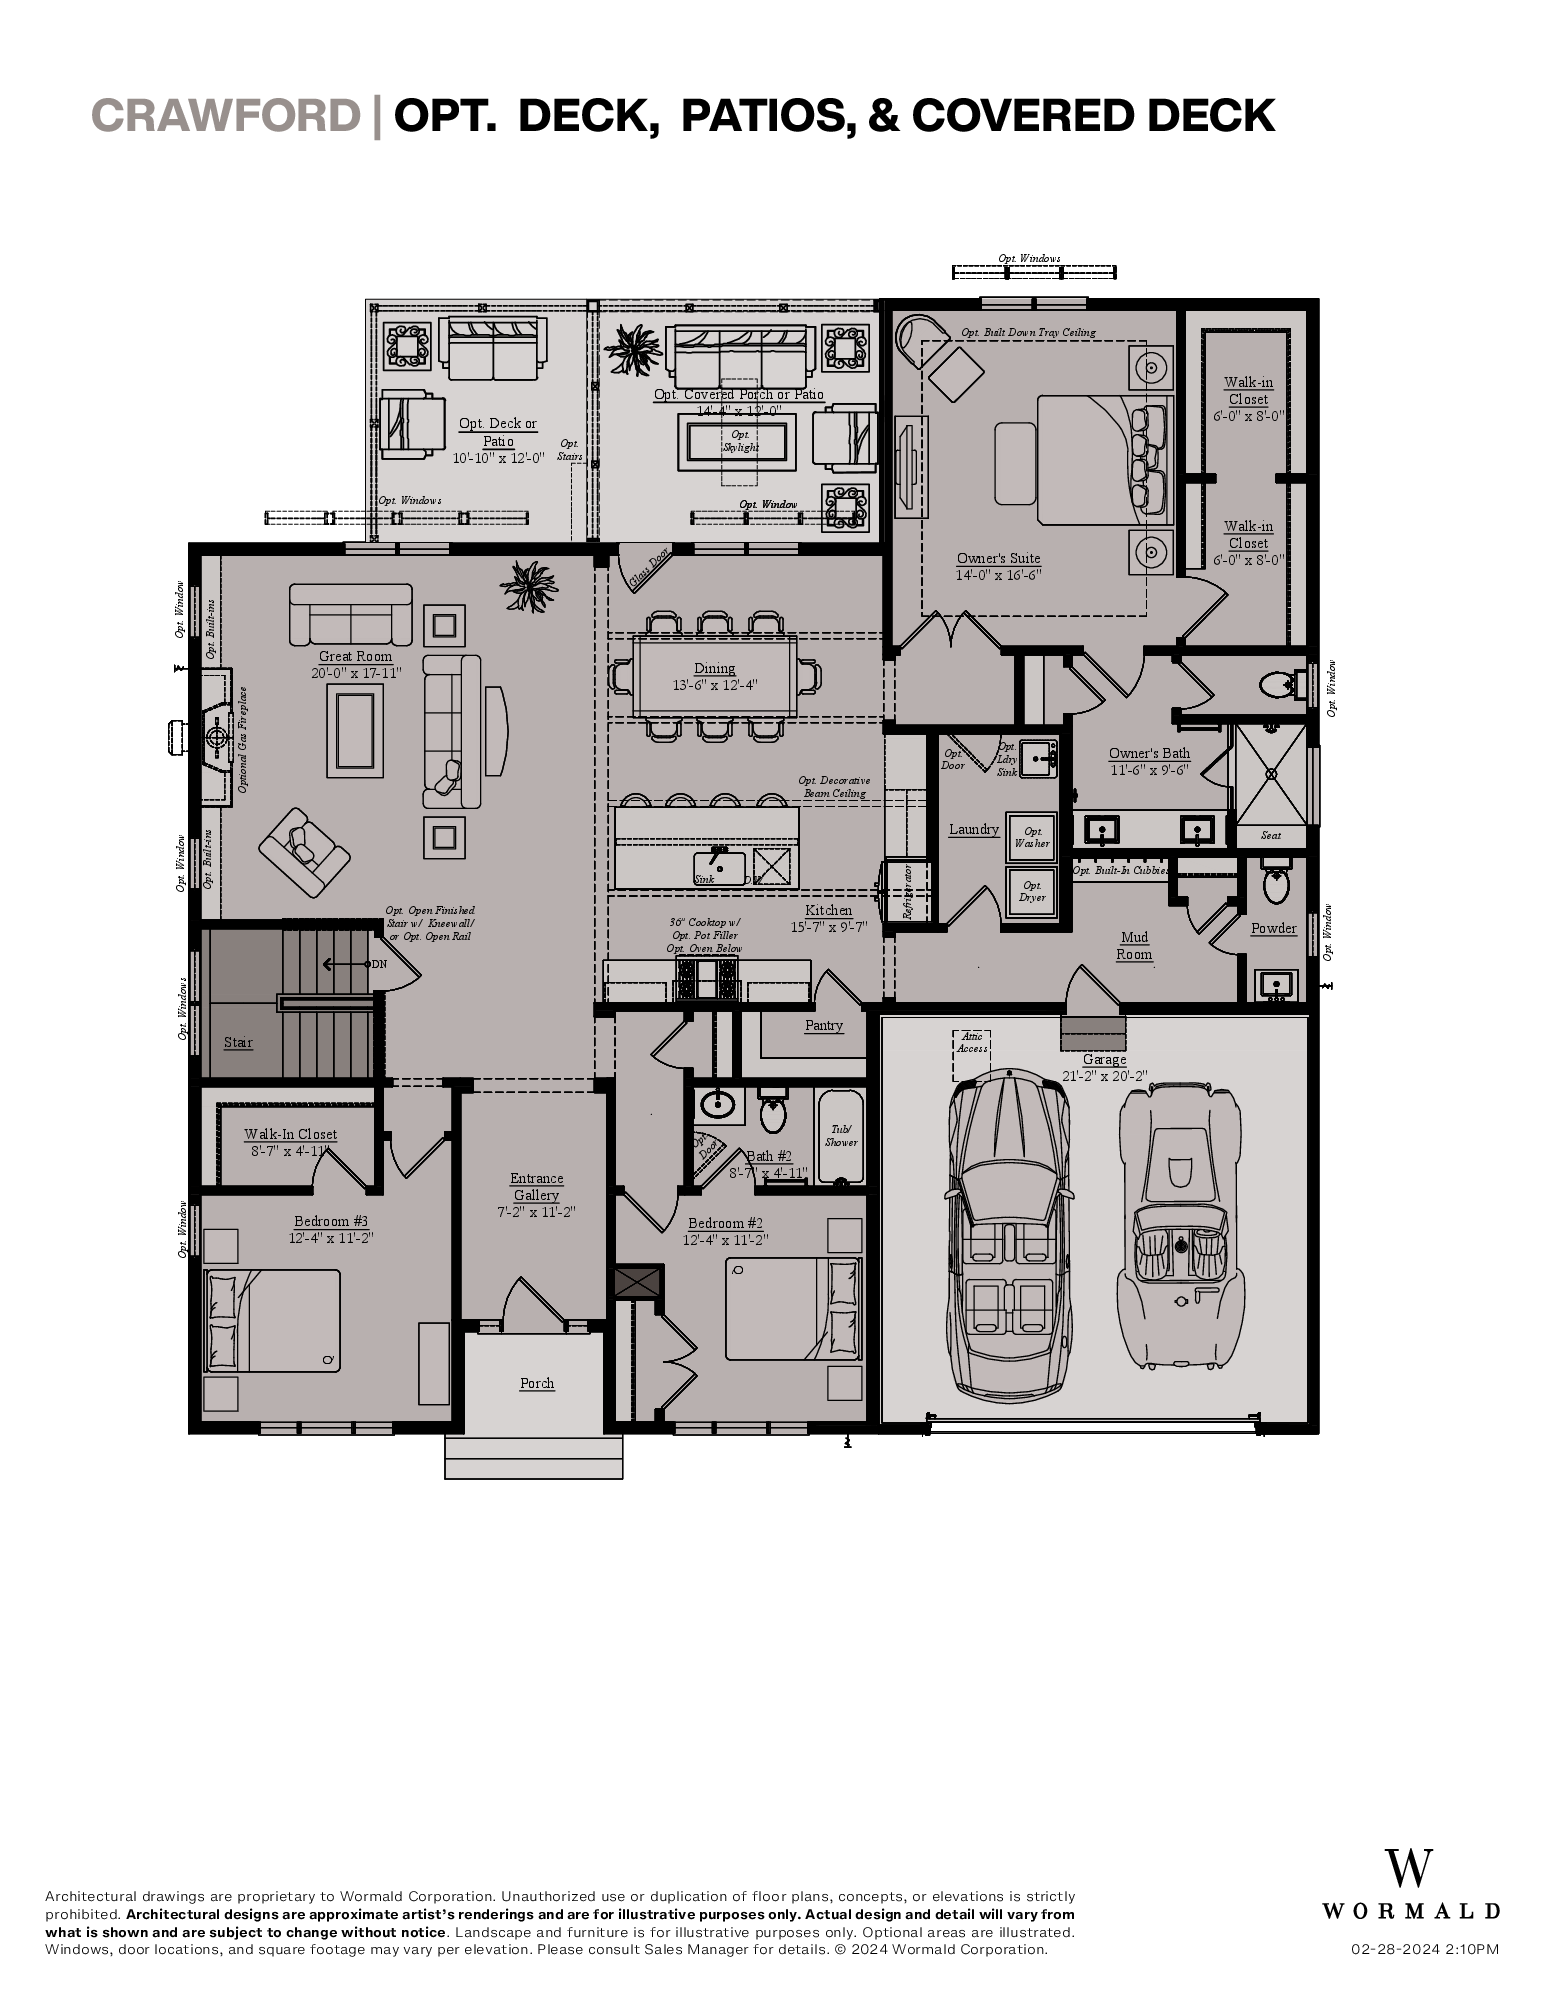 The Crawford floor plan 1